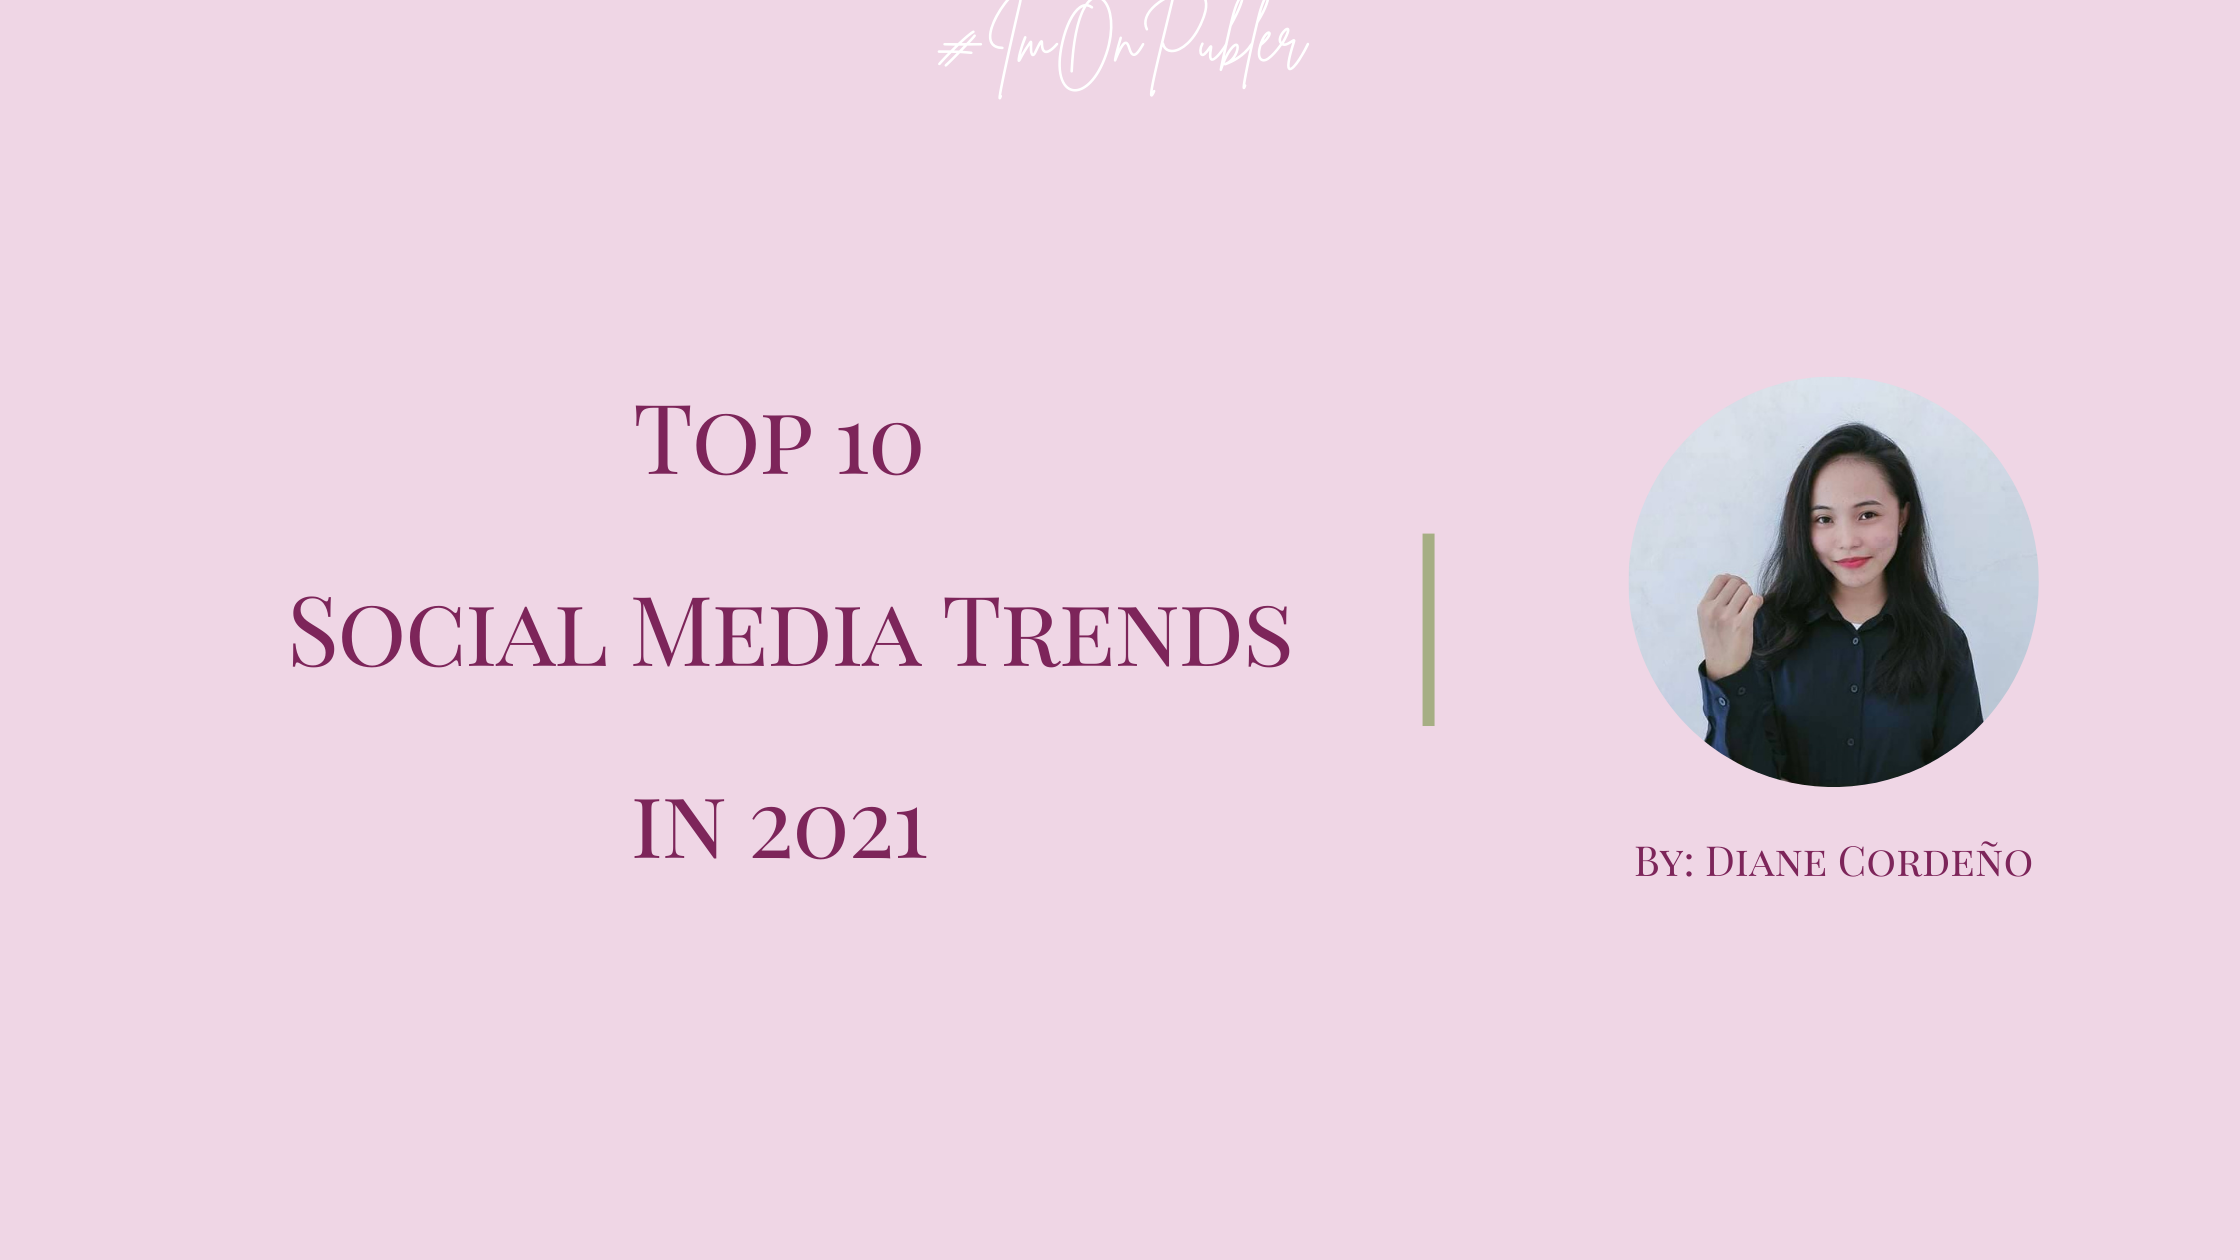 Top 10 Social Media Trends in 2021 by Diane Cordeño